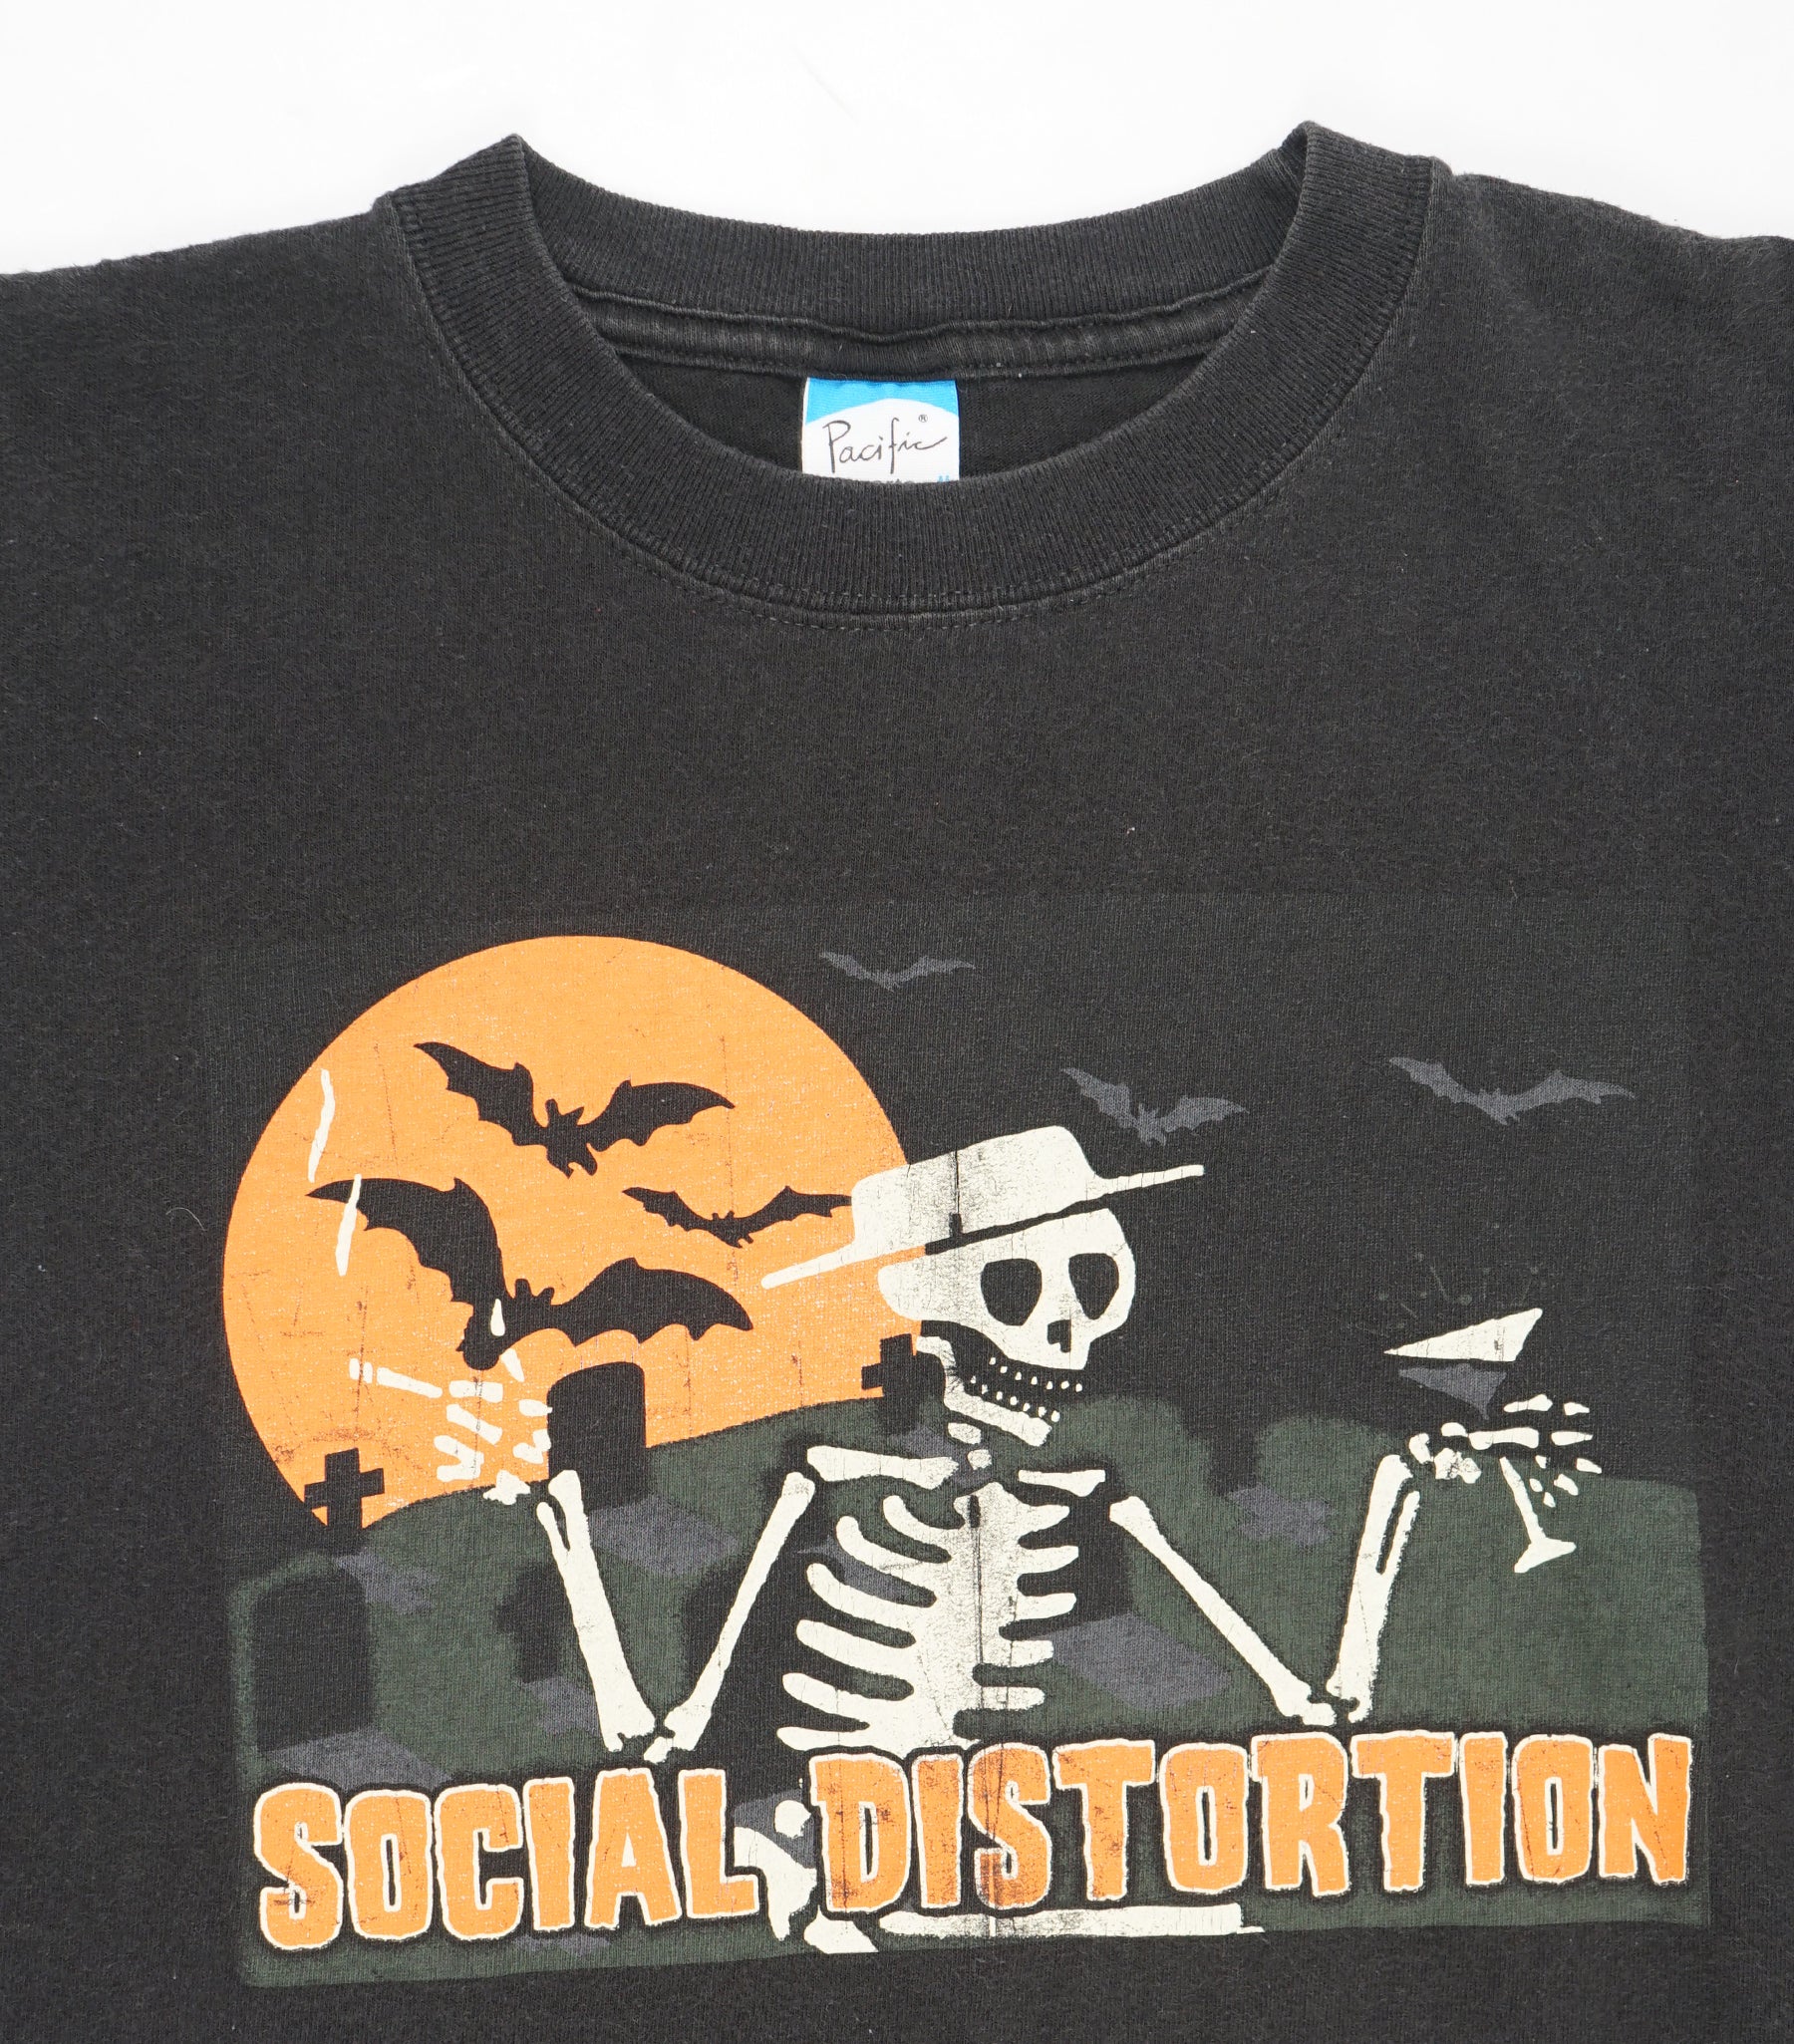 Social Distortion Tour Tee Shirts